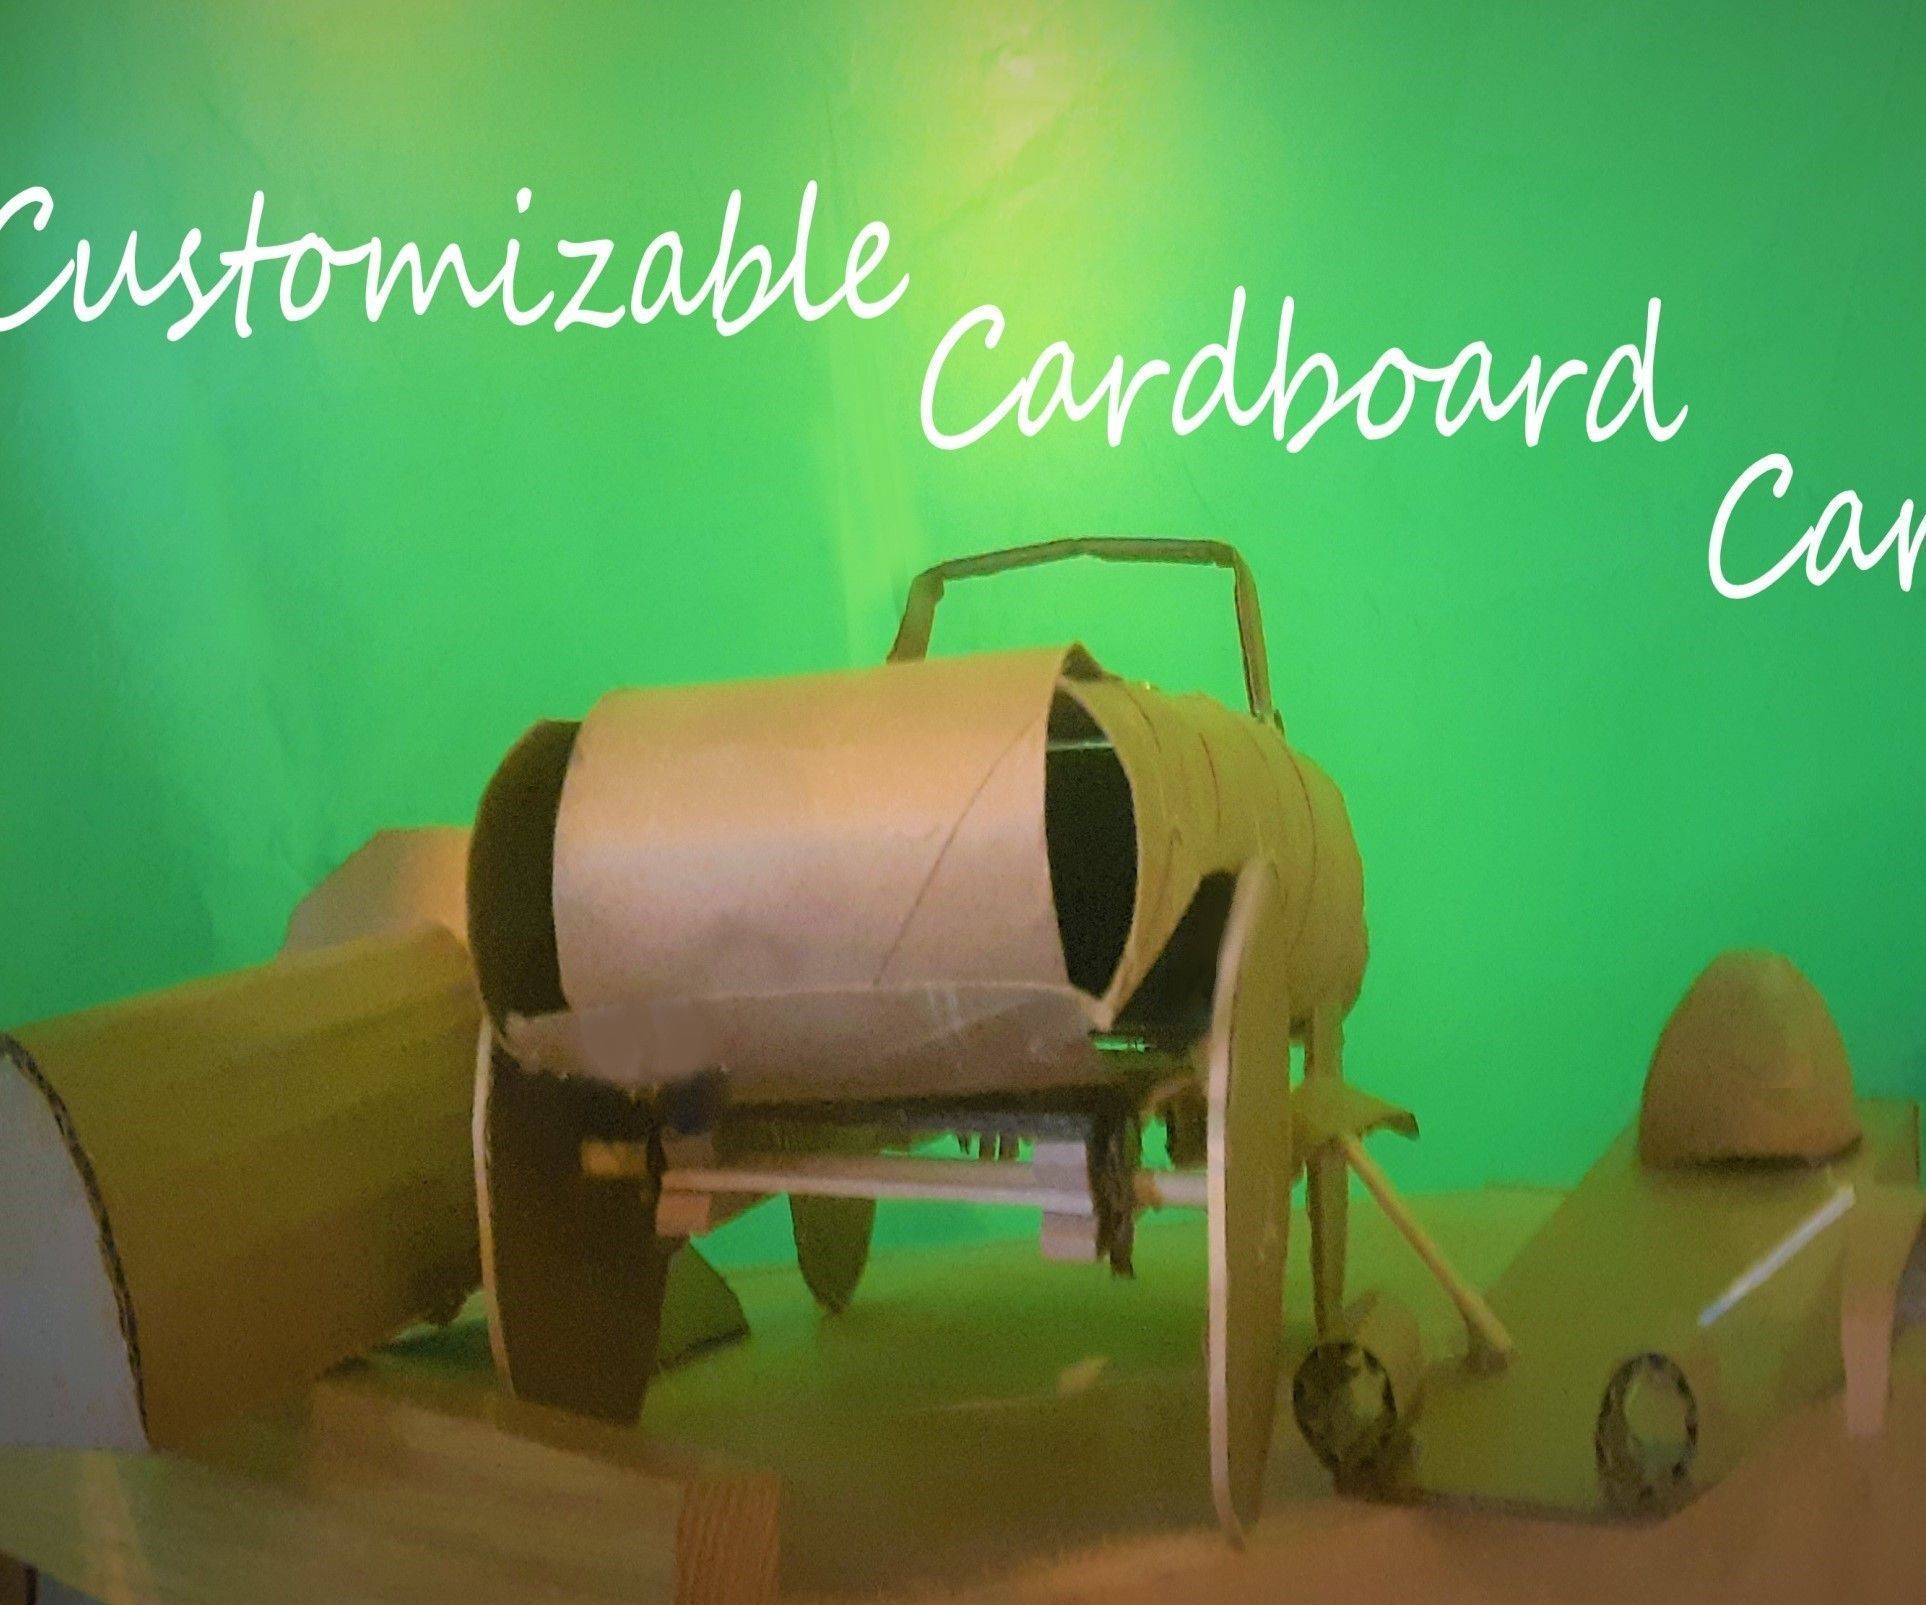 Wind-up Customizable Cardboard Car